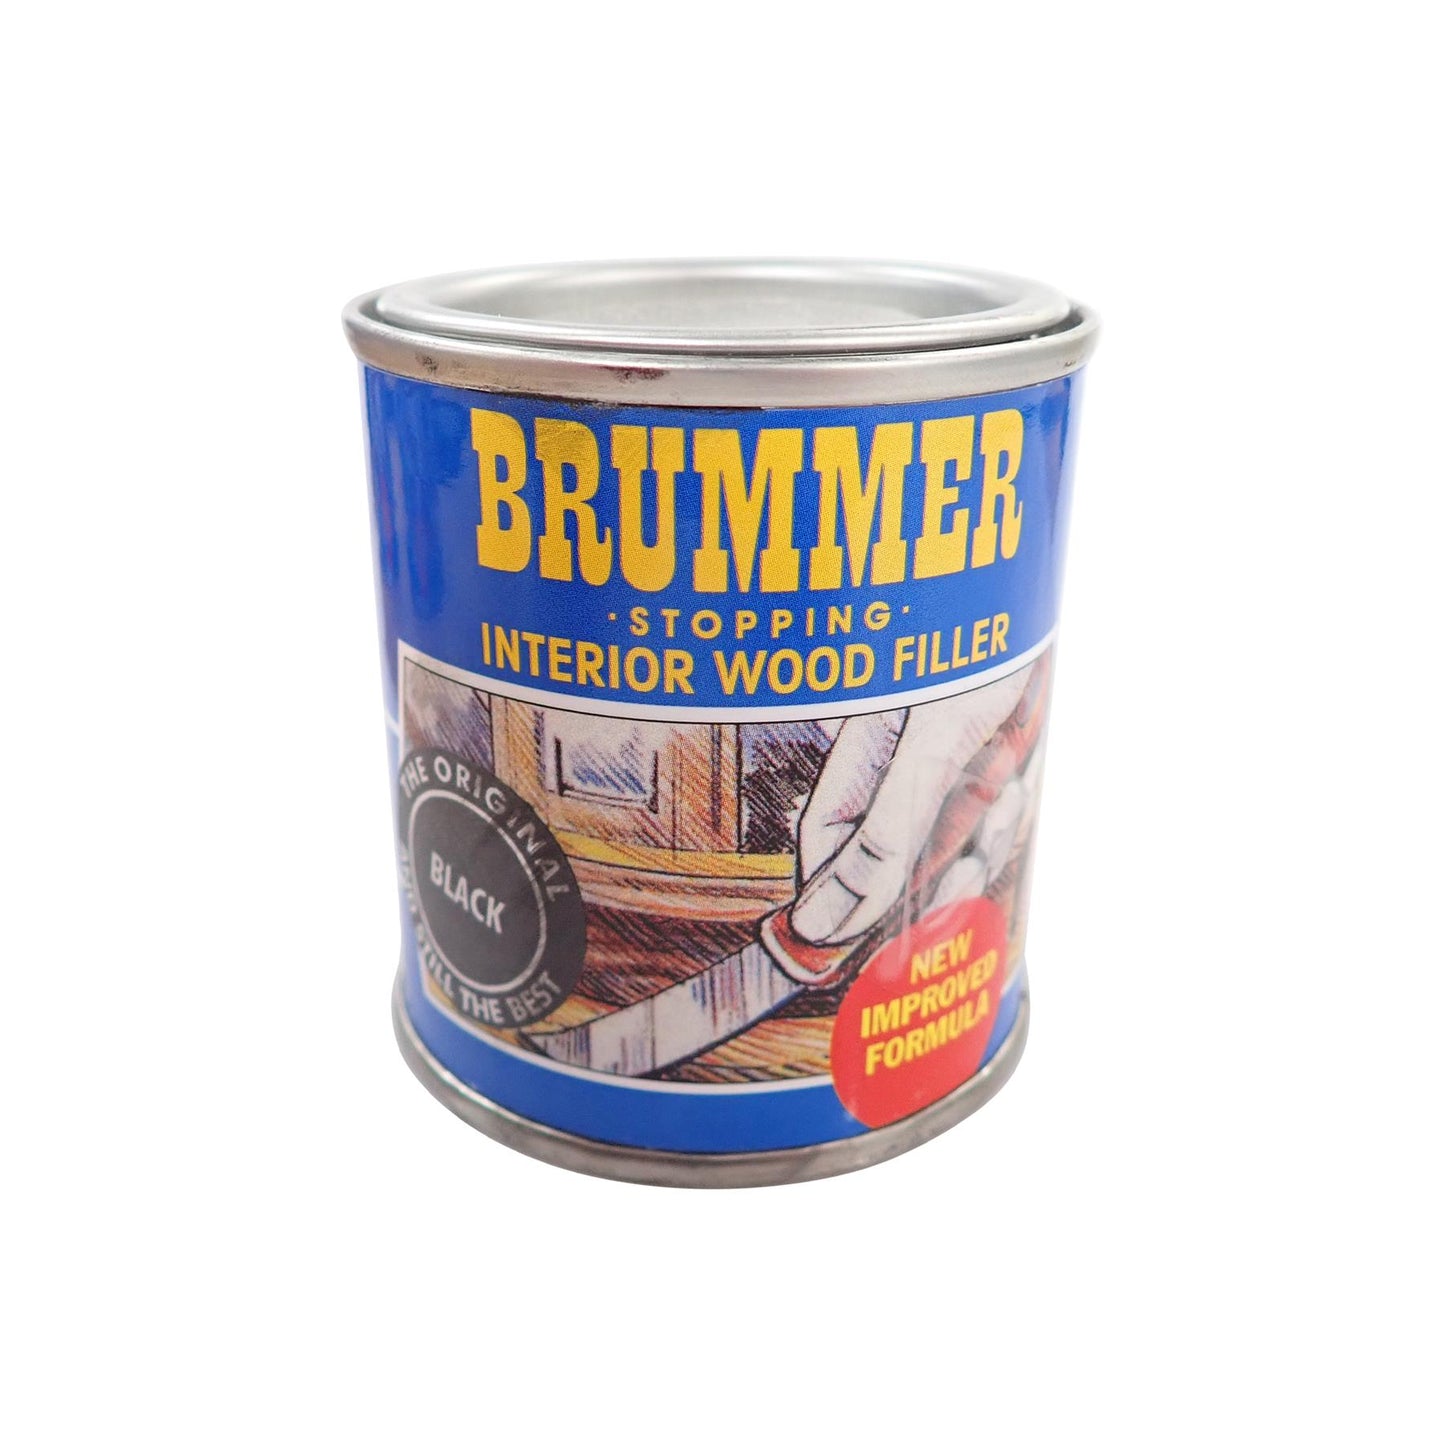 Brummer Interior Wood Filler 250g